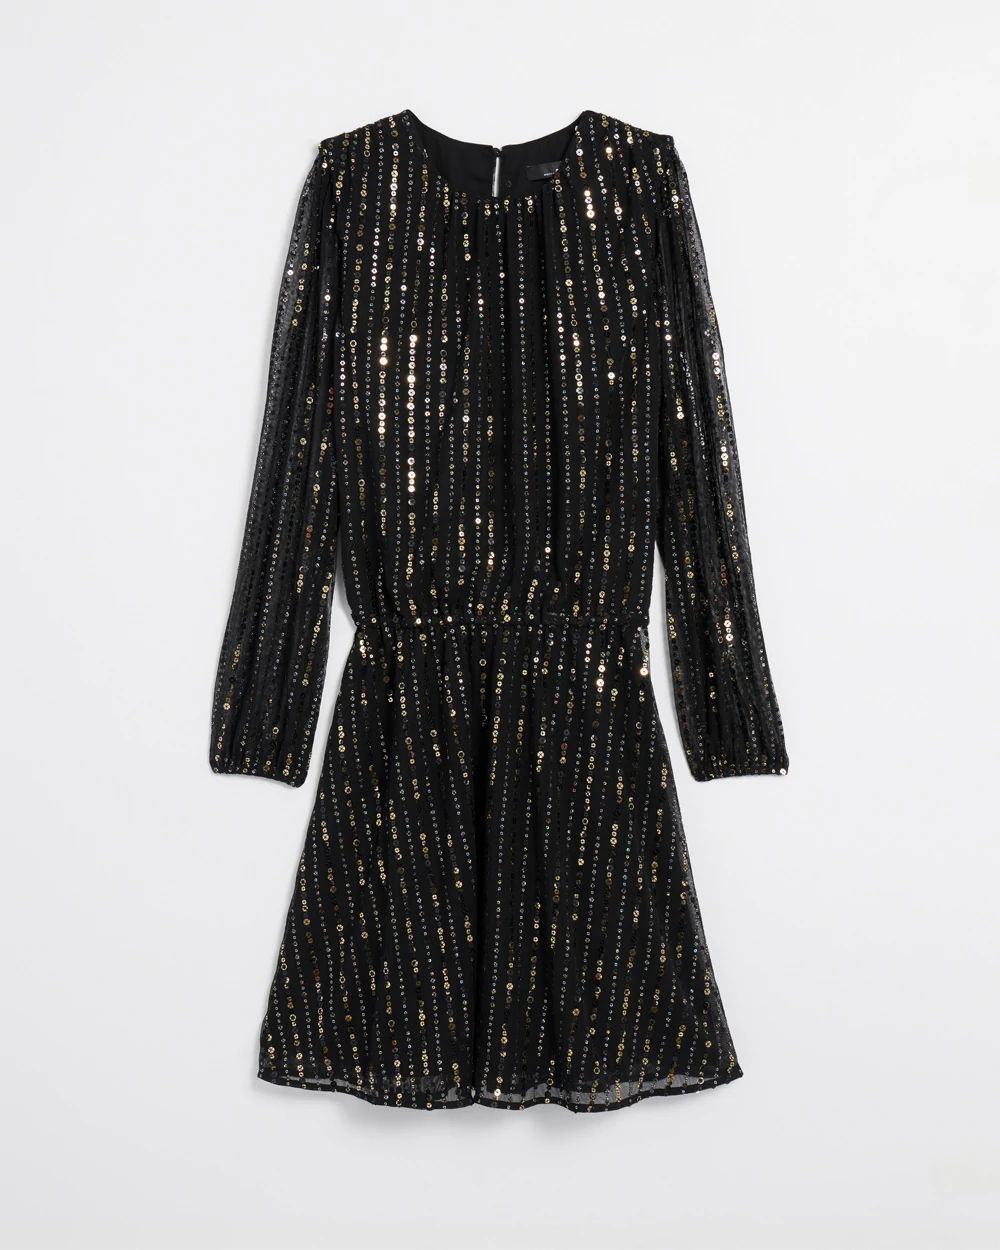 Petite Long-Sleeve Sequin Blouson Dress click to view larger image.